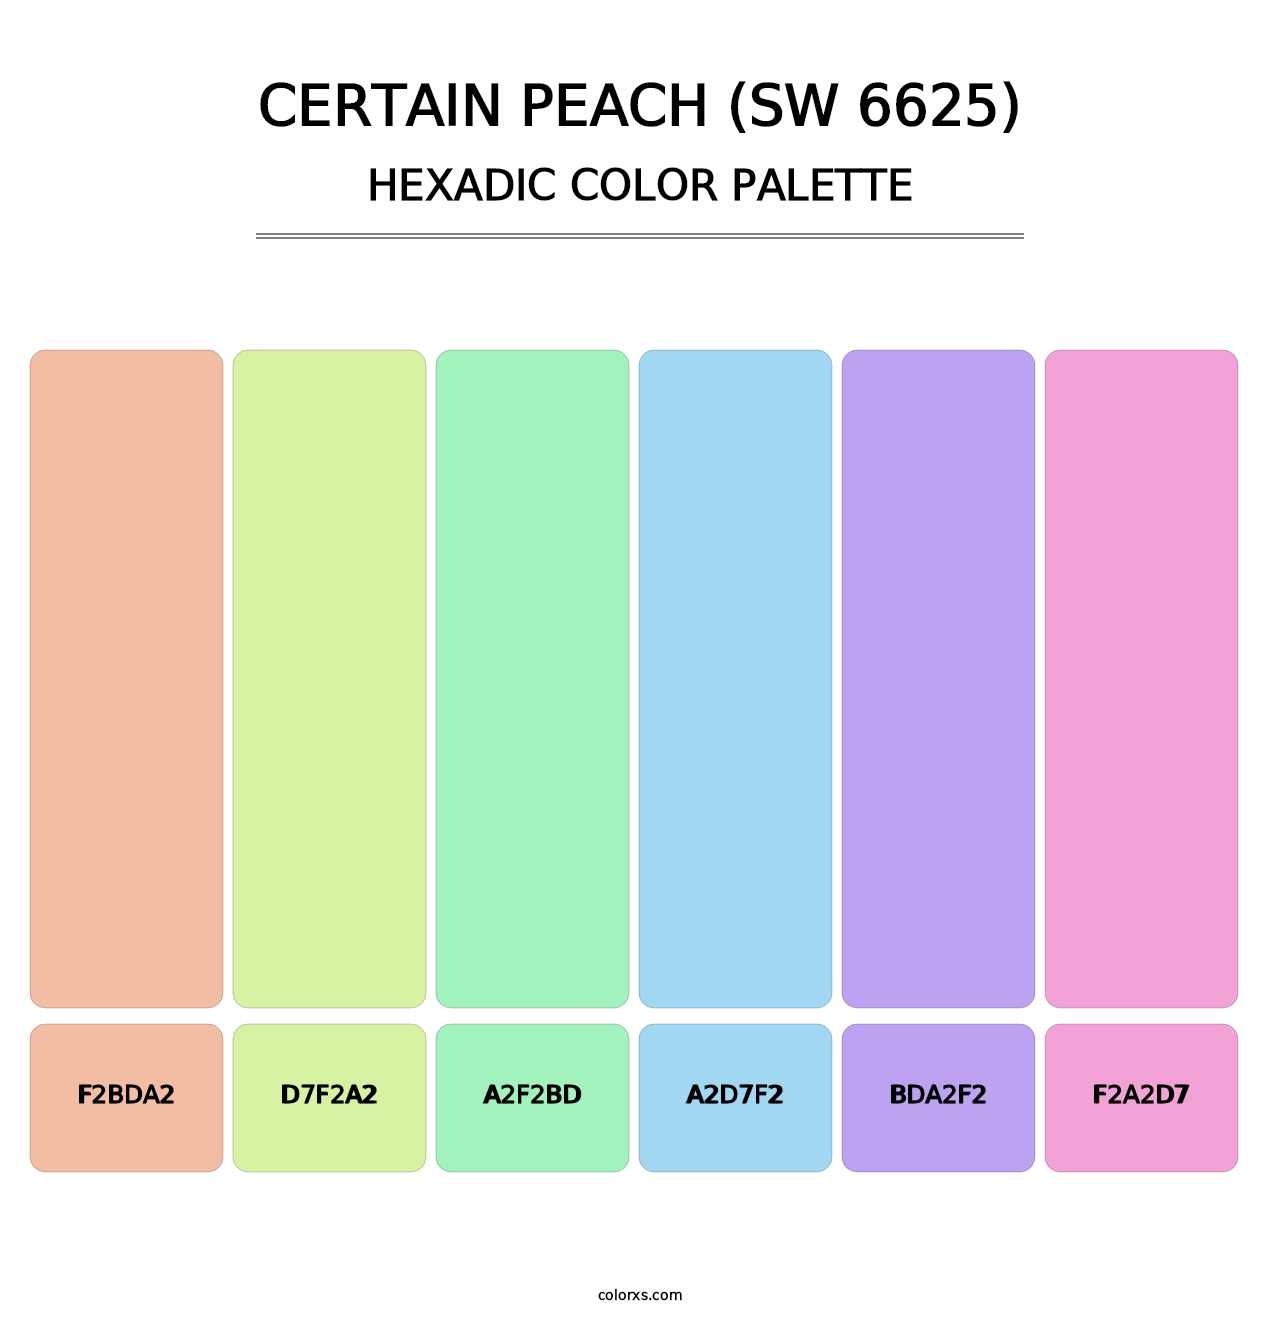 Certain Peach (SW 6625) - Hexadic Color Palette